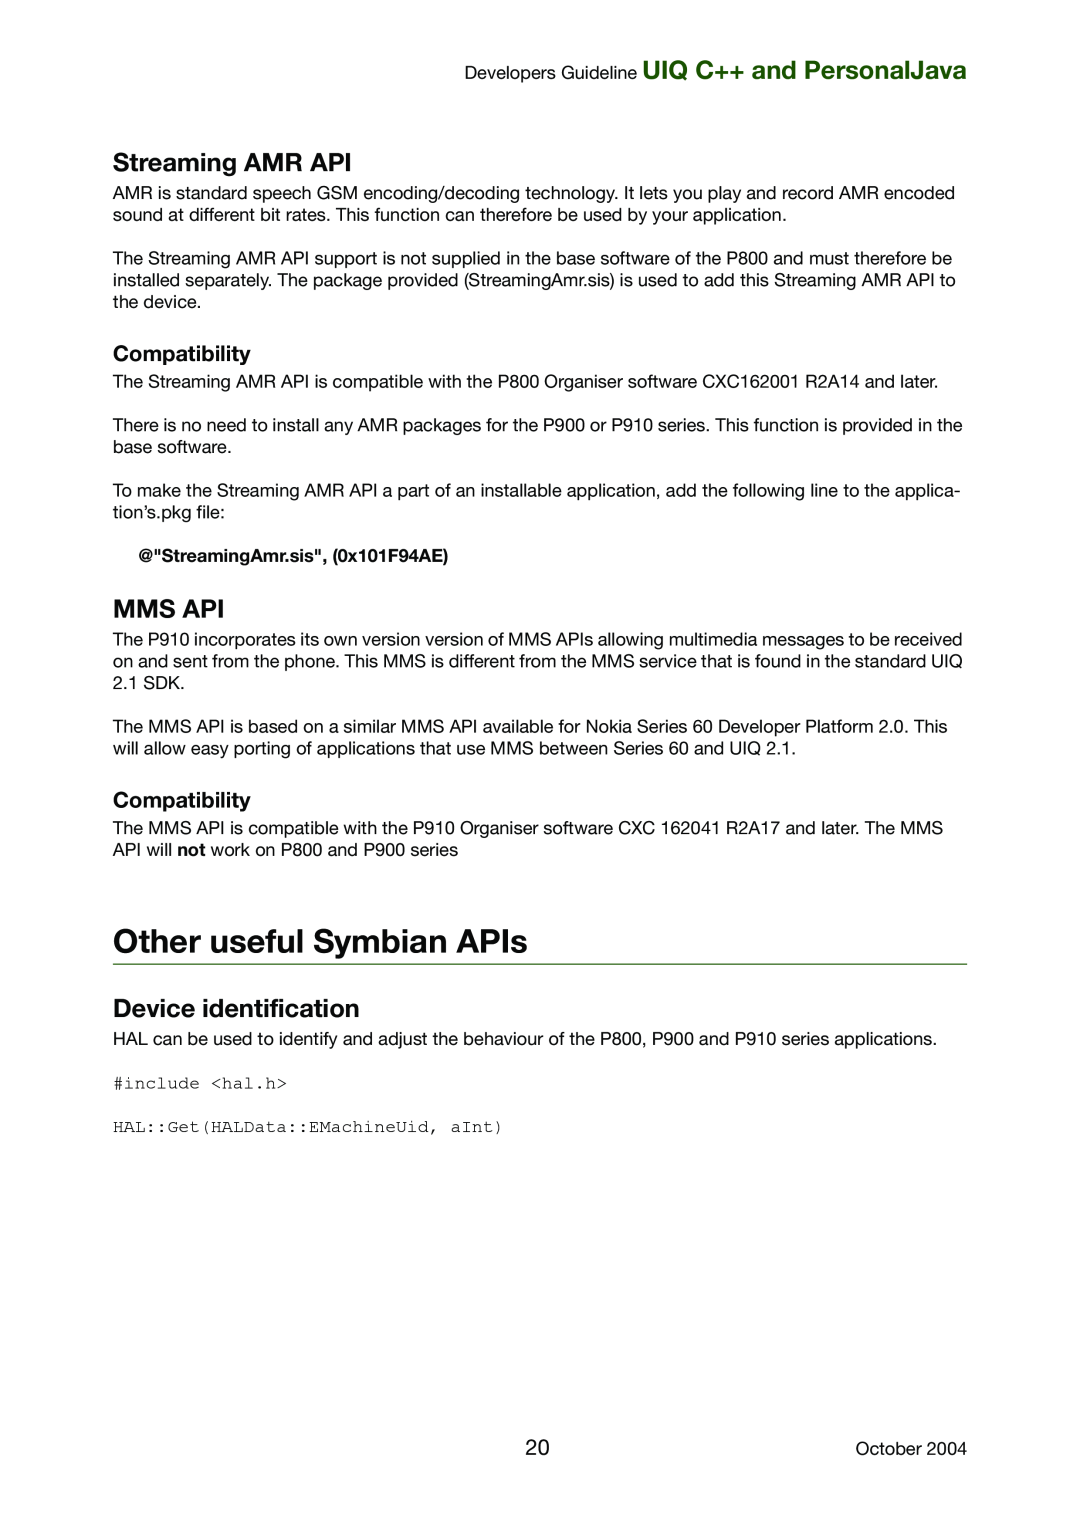 Sony Ericsson P900, P800 manual Other useful Symbian APIs, Streaming AMR API, Mms Api, Device identification, Compatibility 